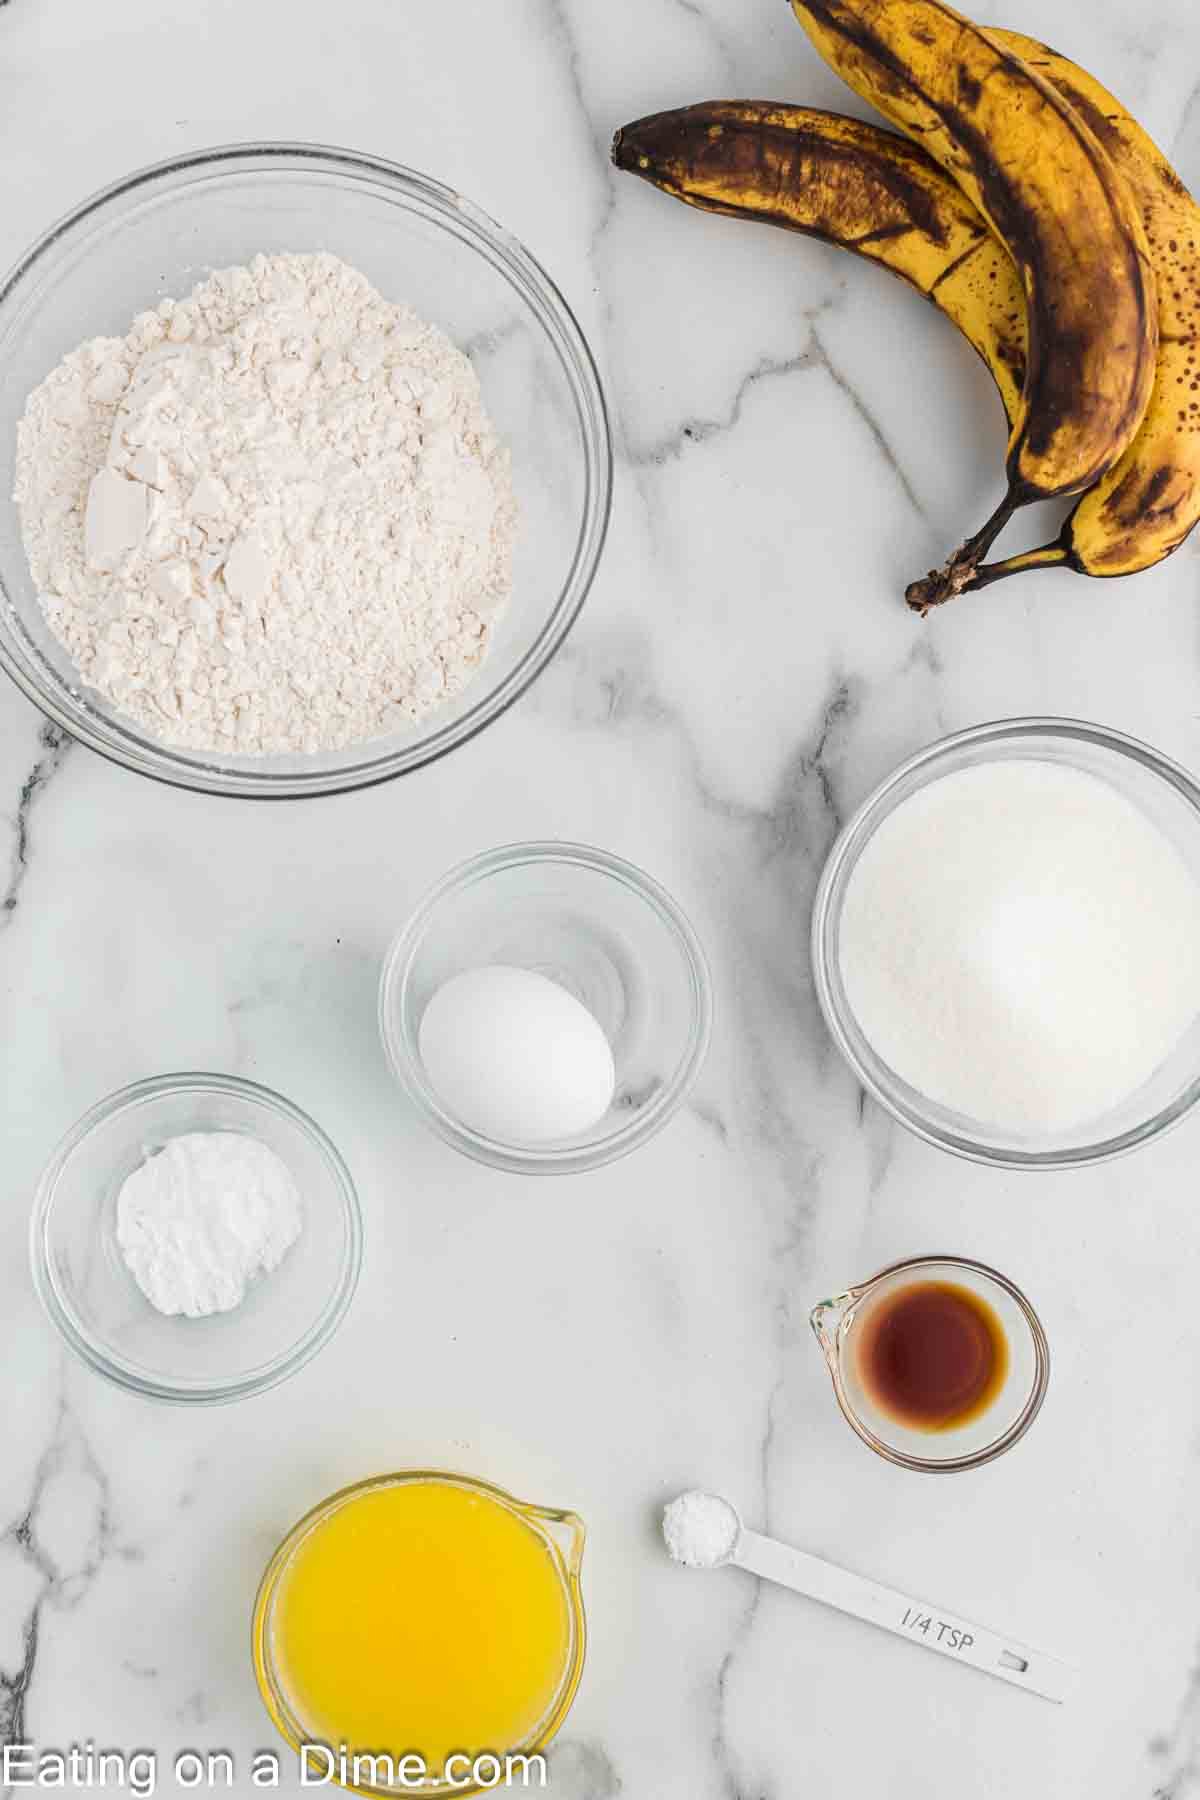 Ingredients needed - bananas, butter, egg, sugar, vanilla extract, baking soda, salt, flour